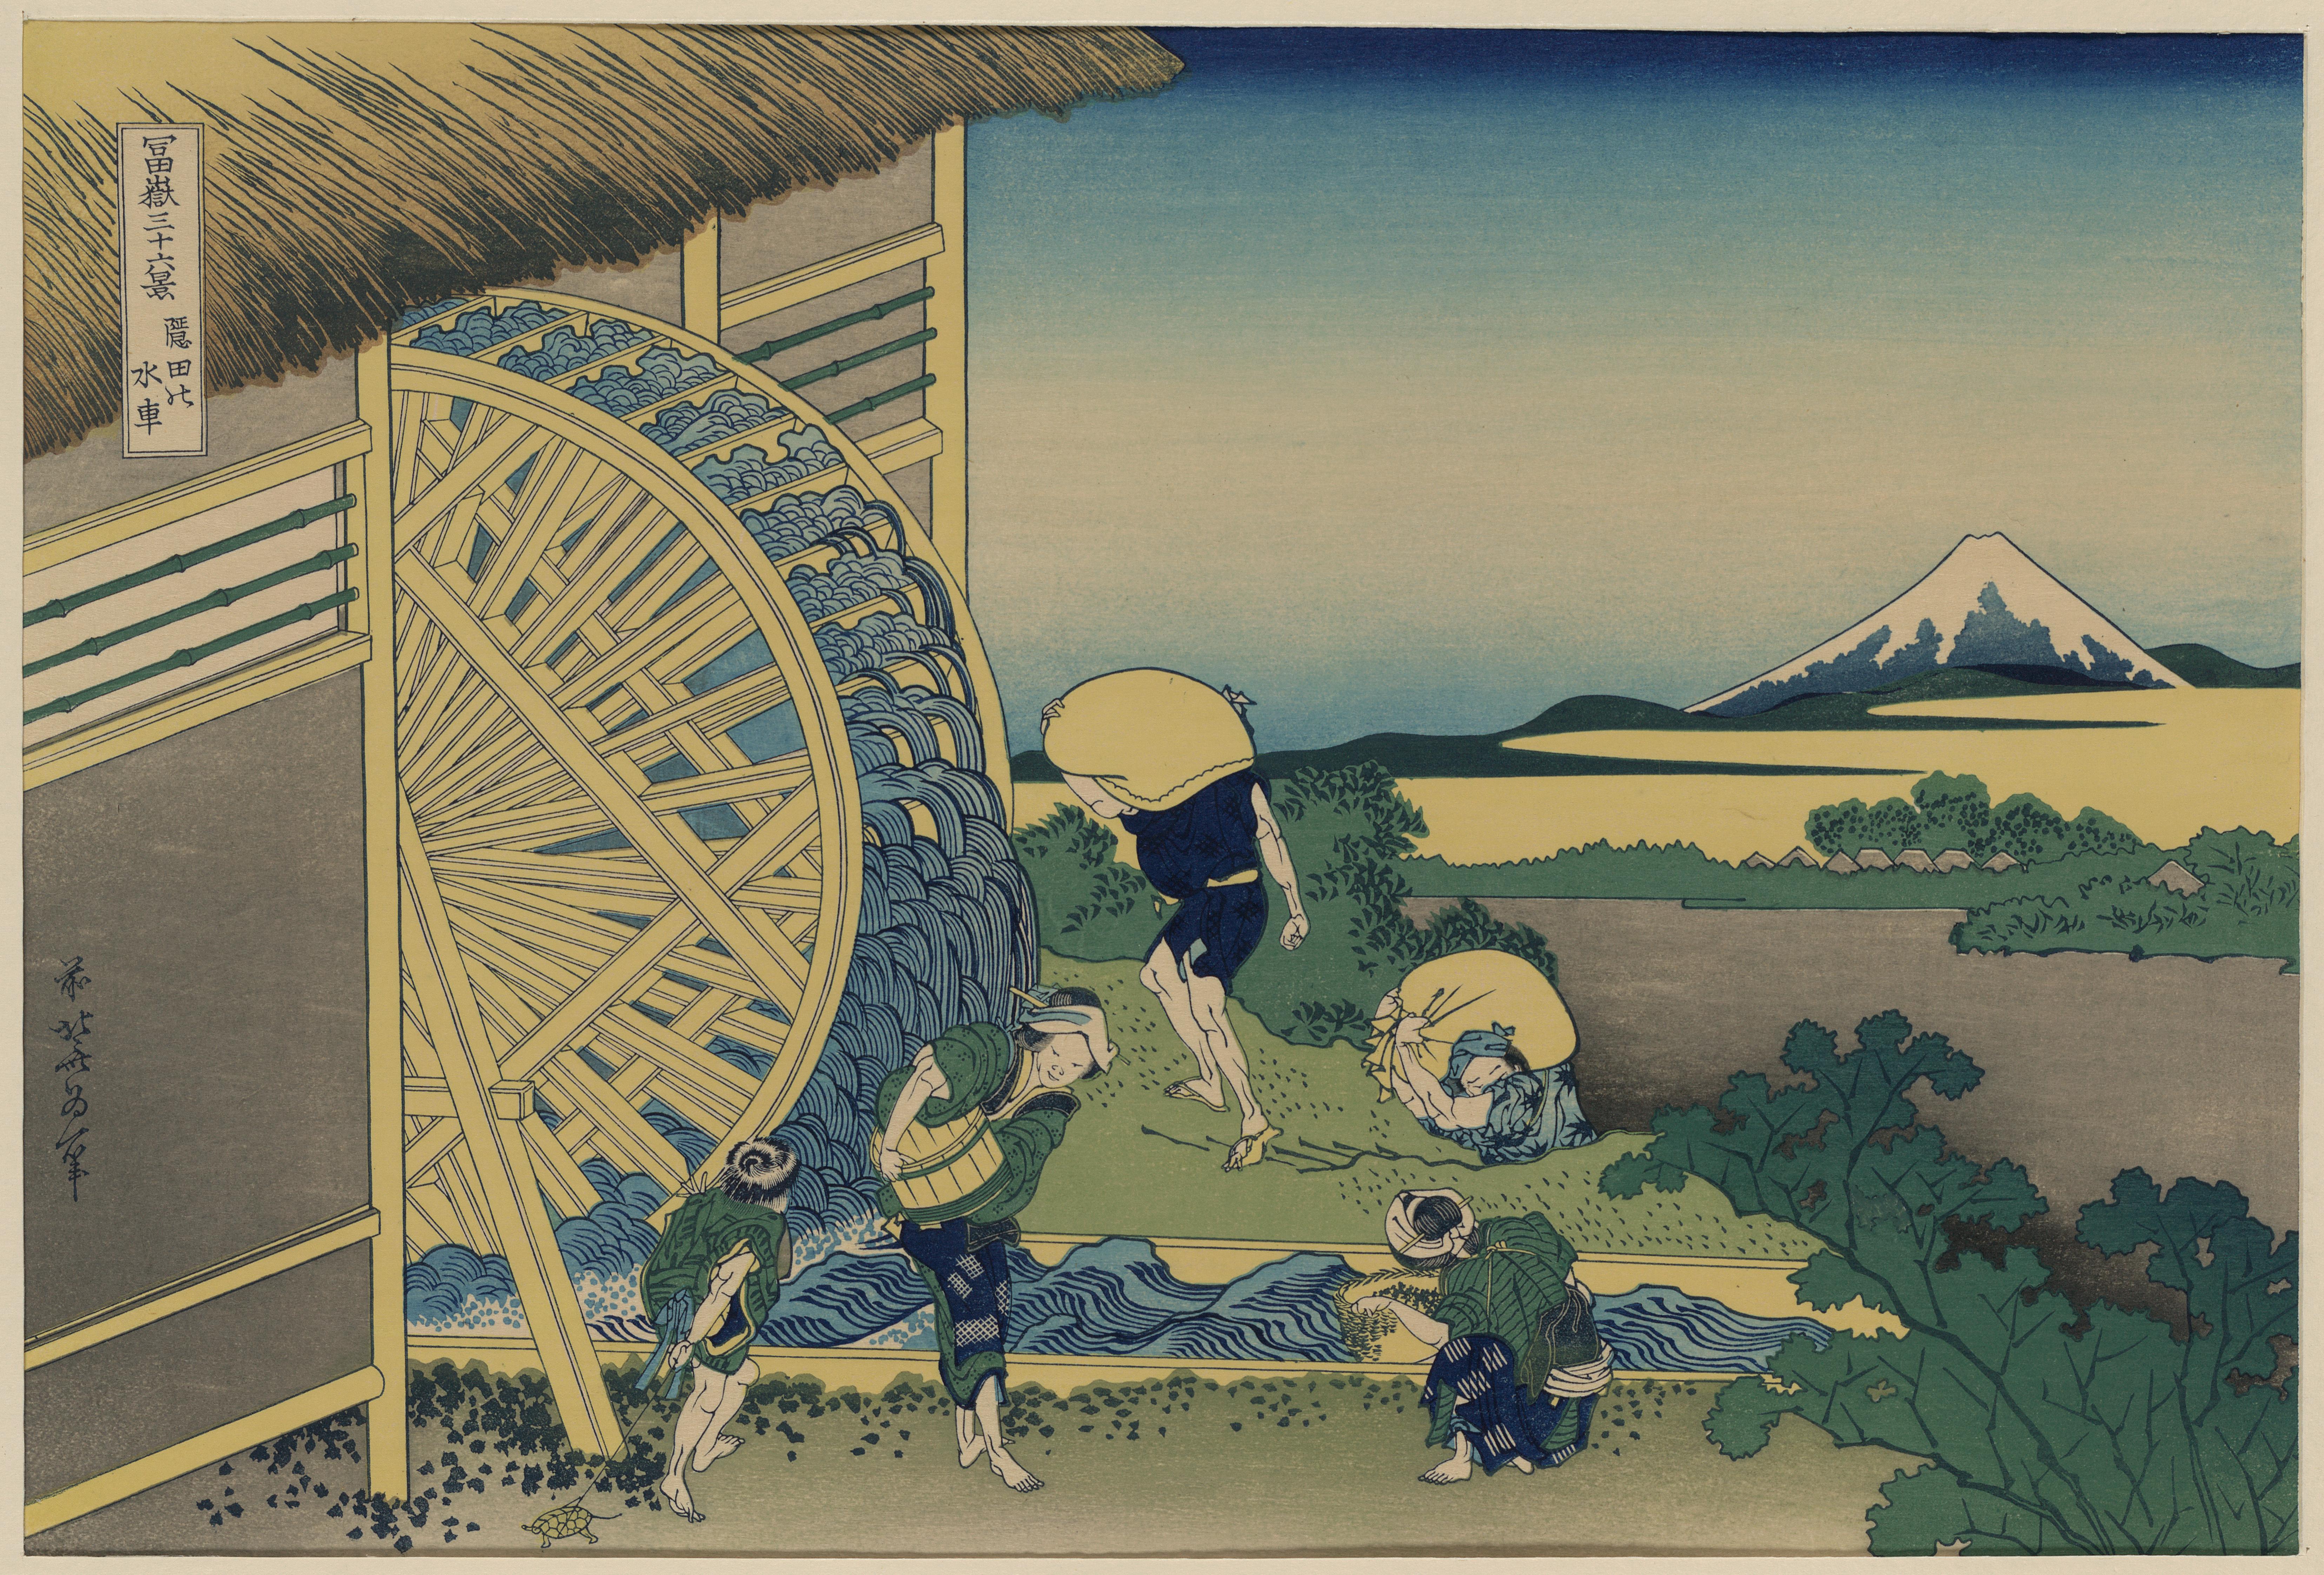 Katsushika Hokusai. The Waterwheel at Onden, from the series Thirty-six Views of Mount Fuji